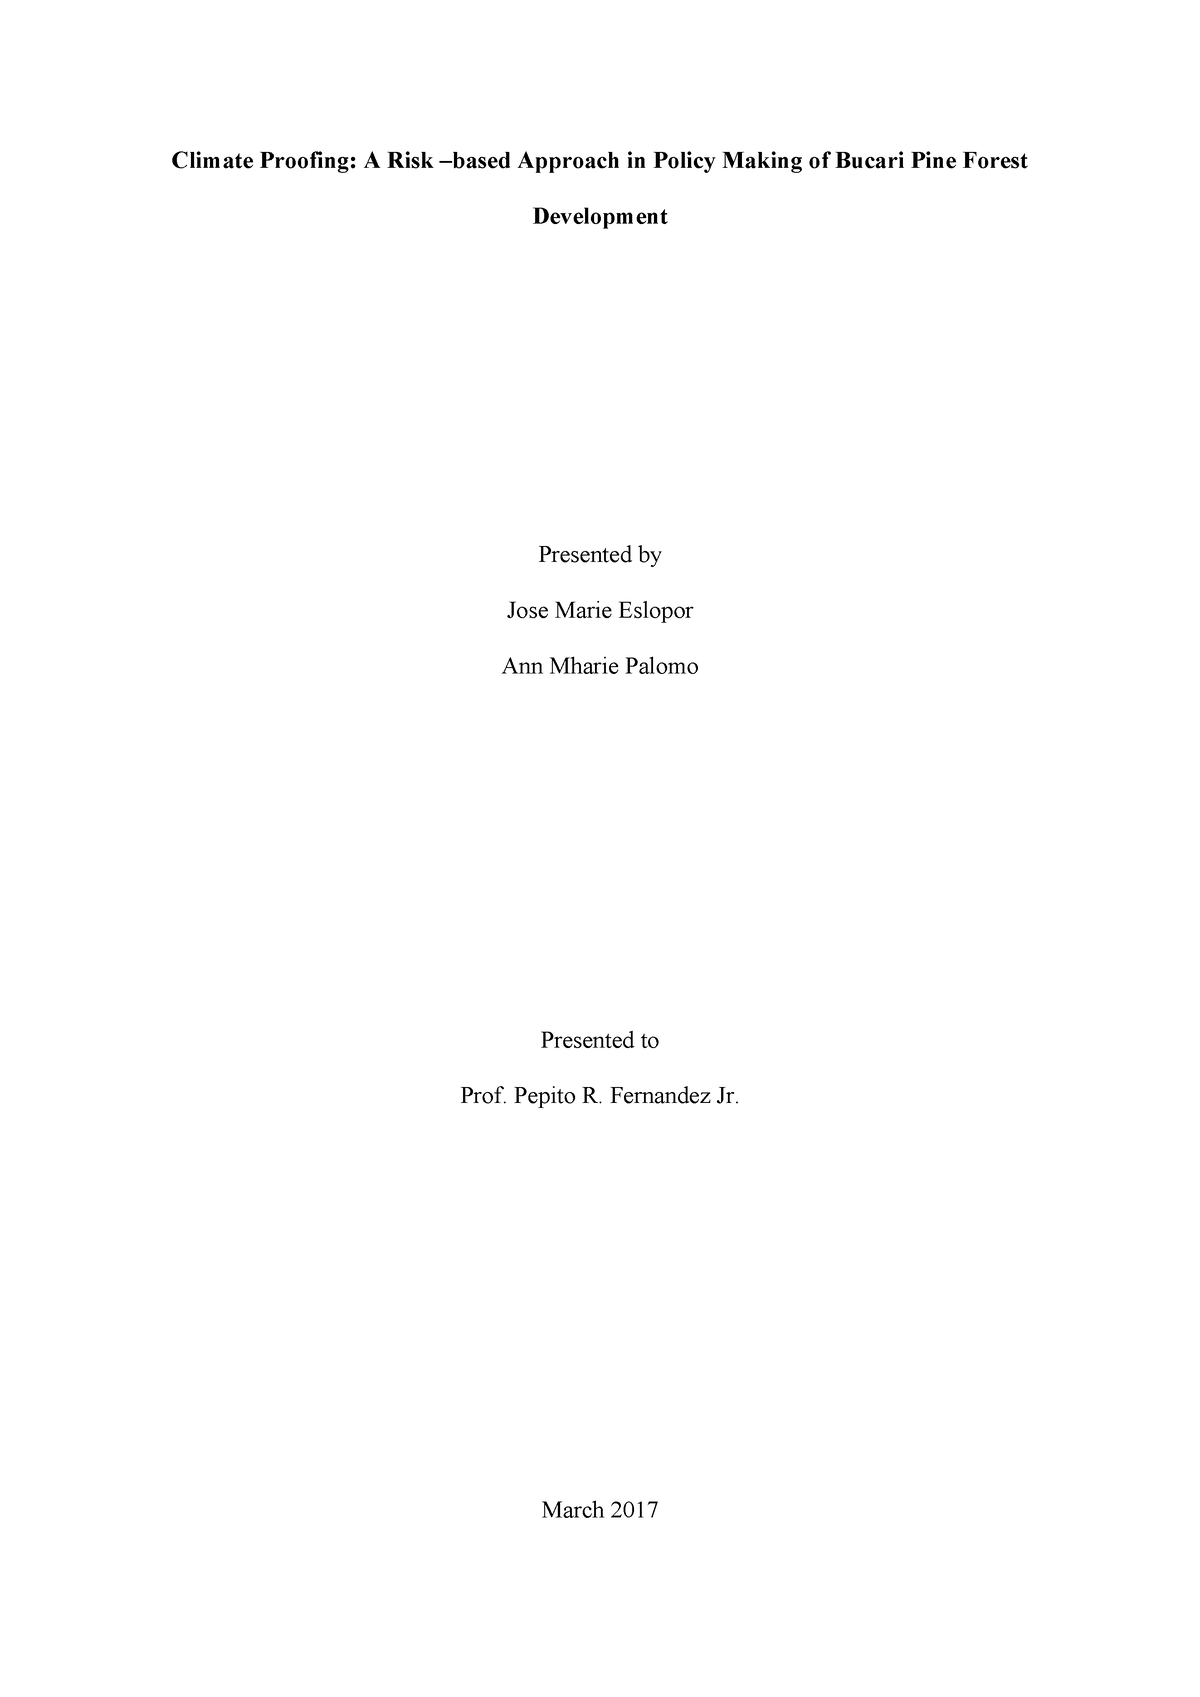 CD 168 Final Paper (Eslopor, Palomo) - Climate Proofing: A Risk –based ...